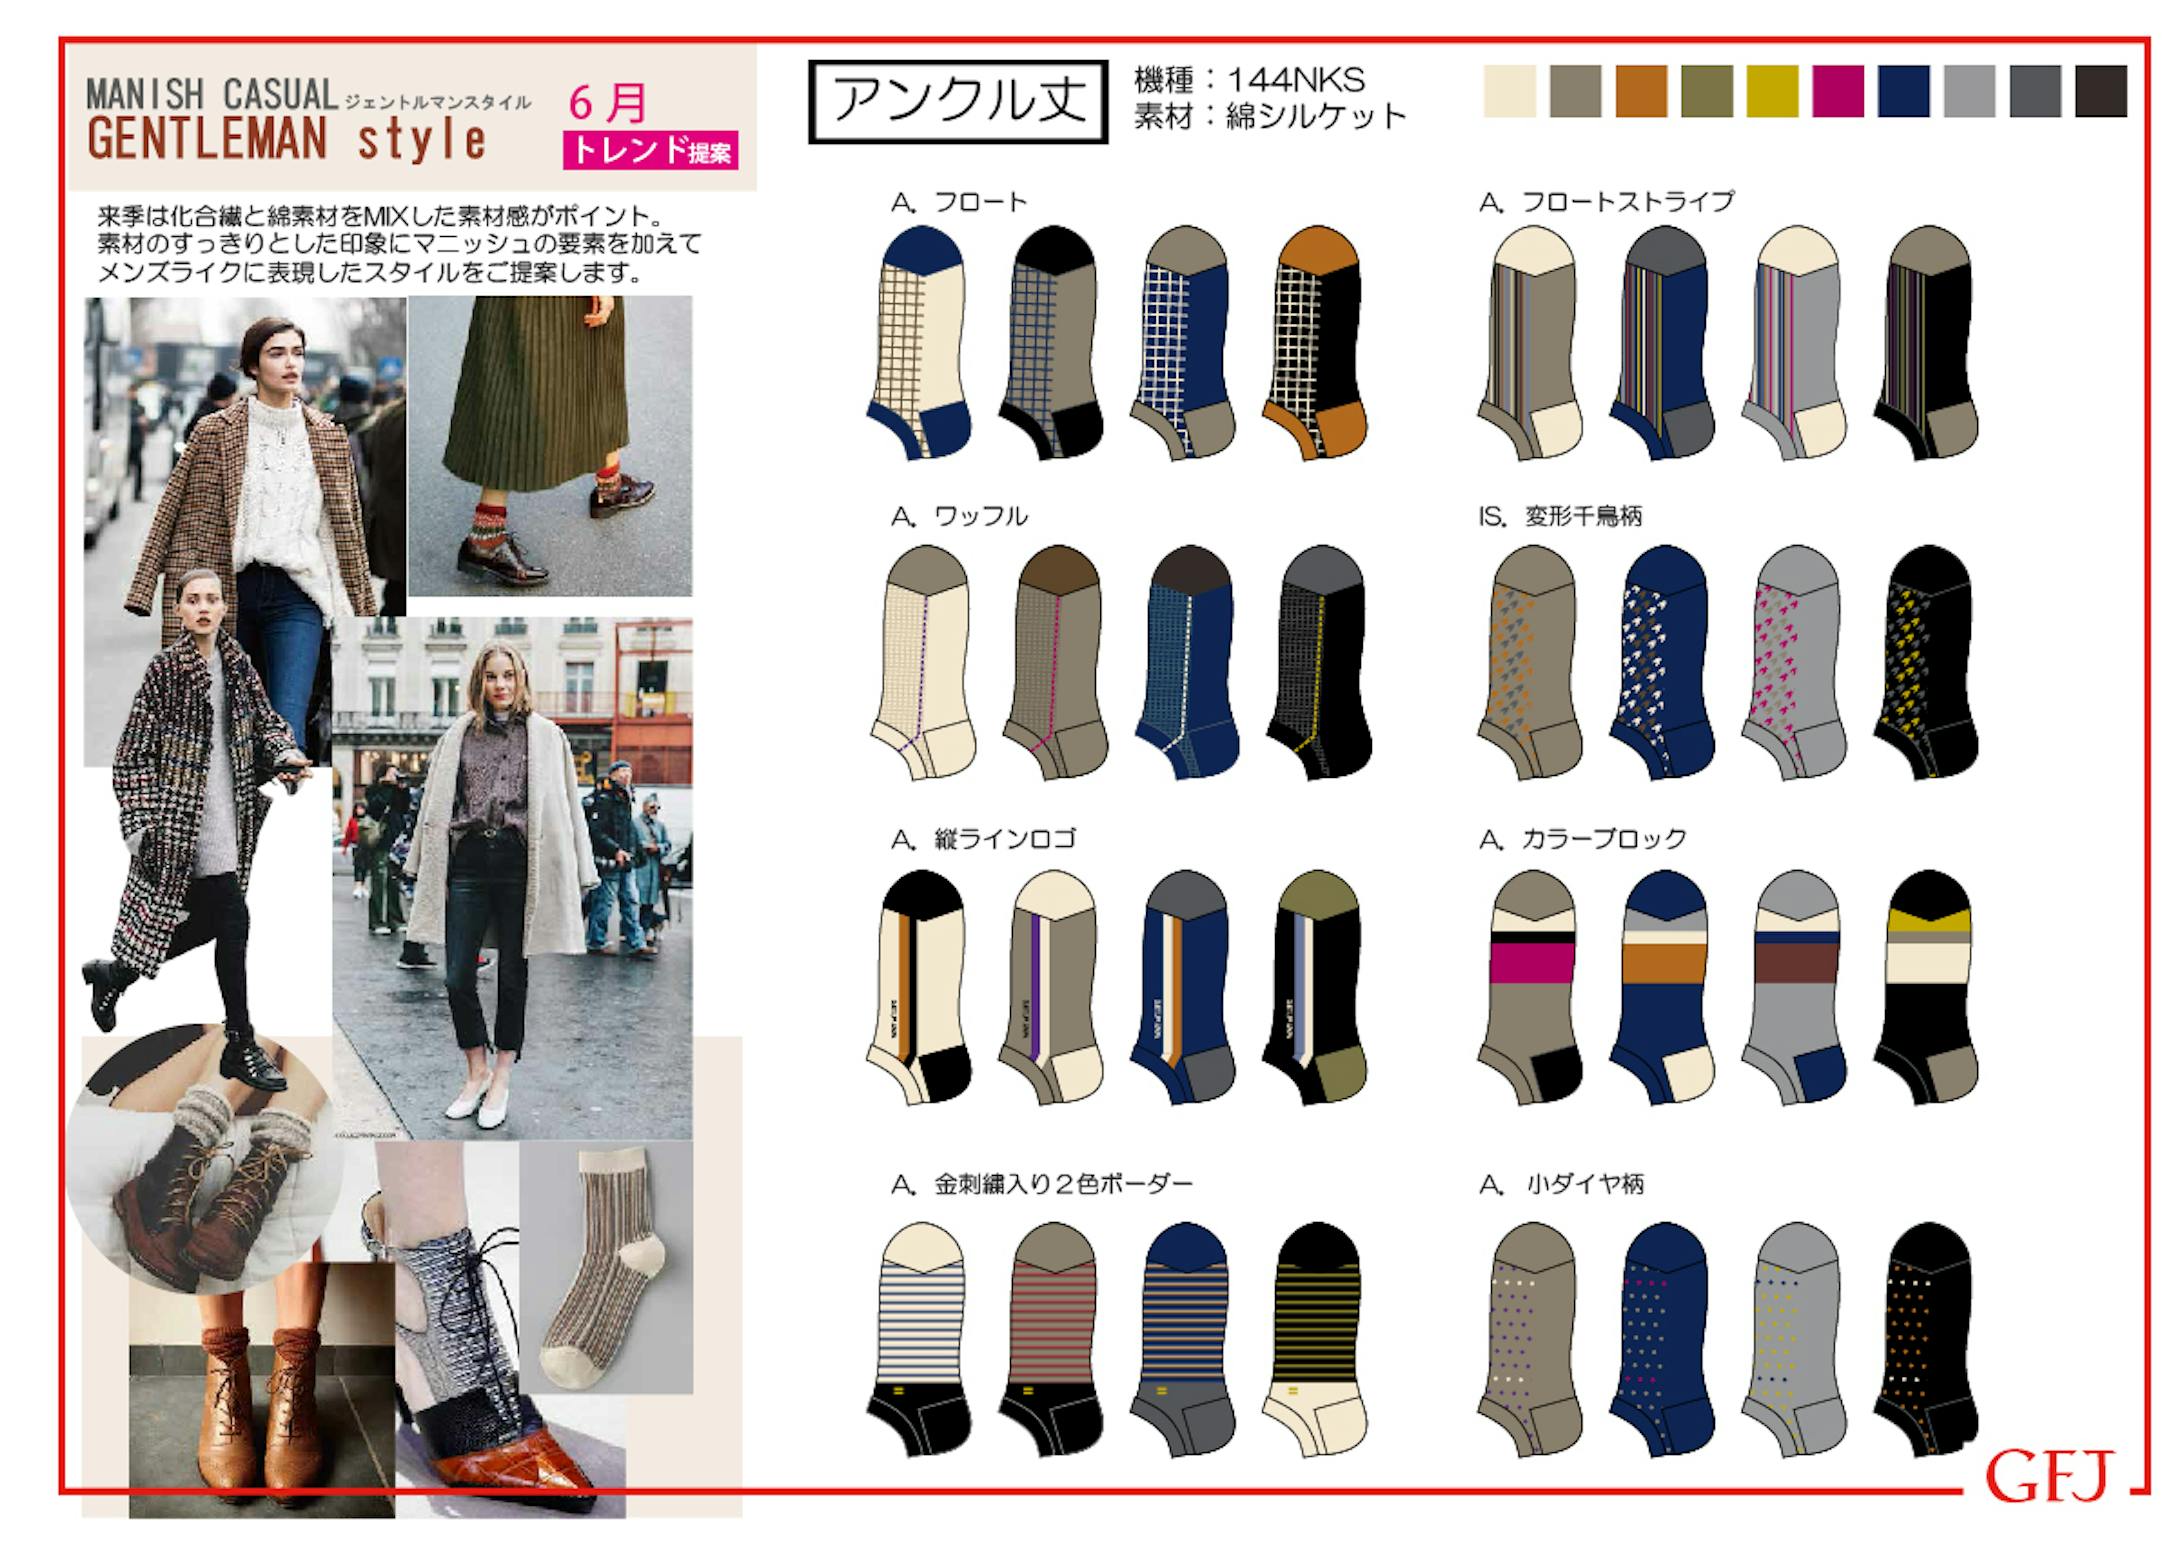 Ladies socks design-6